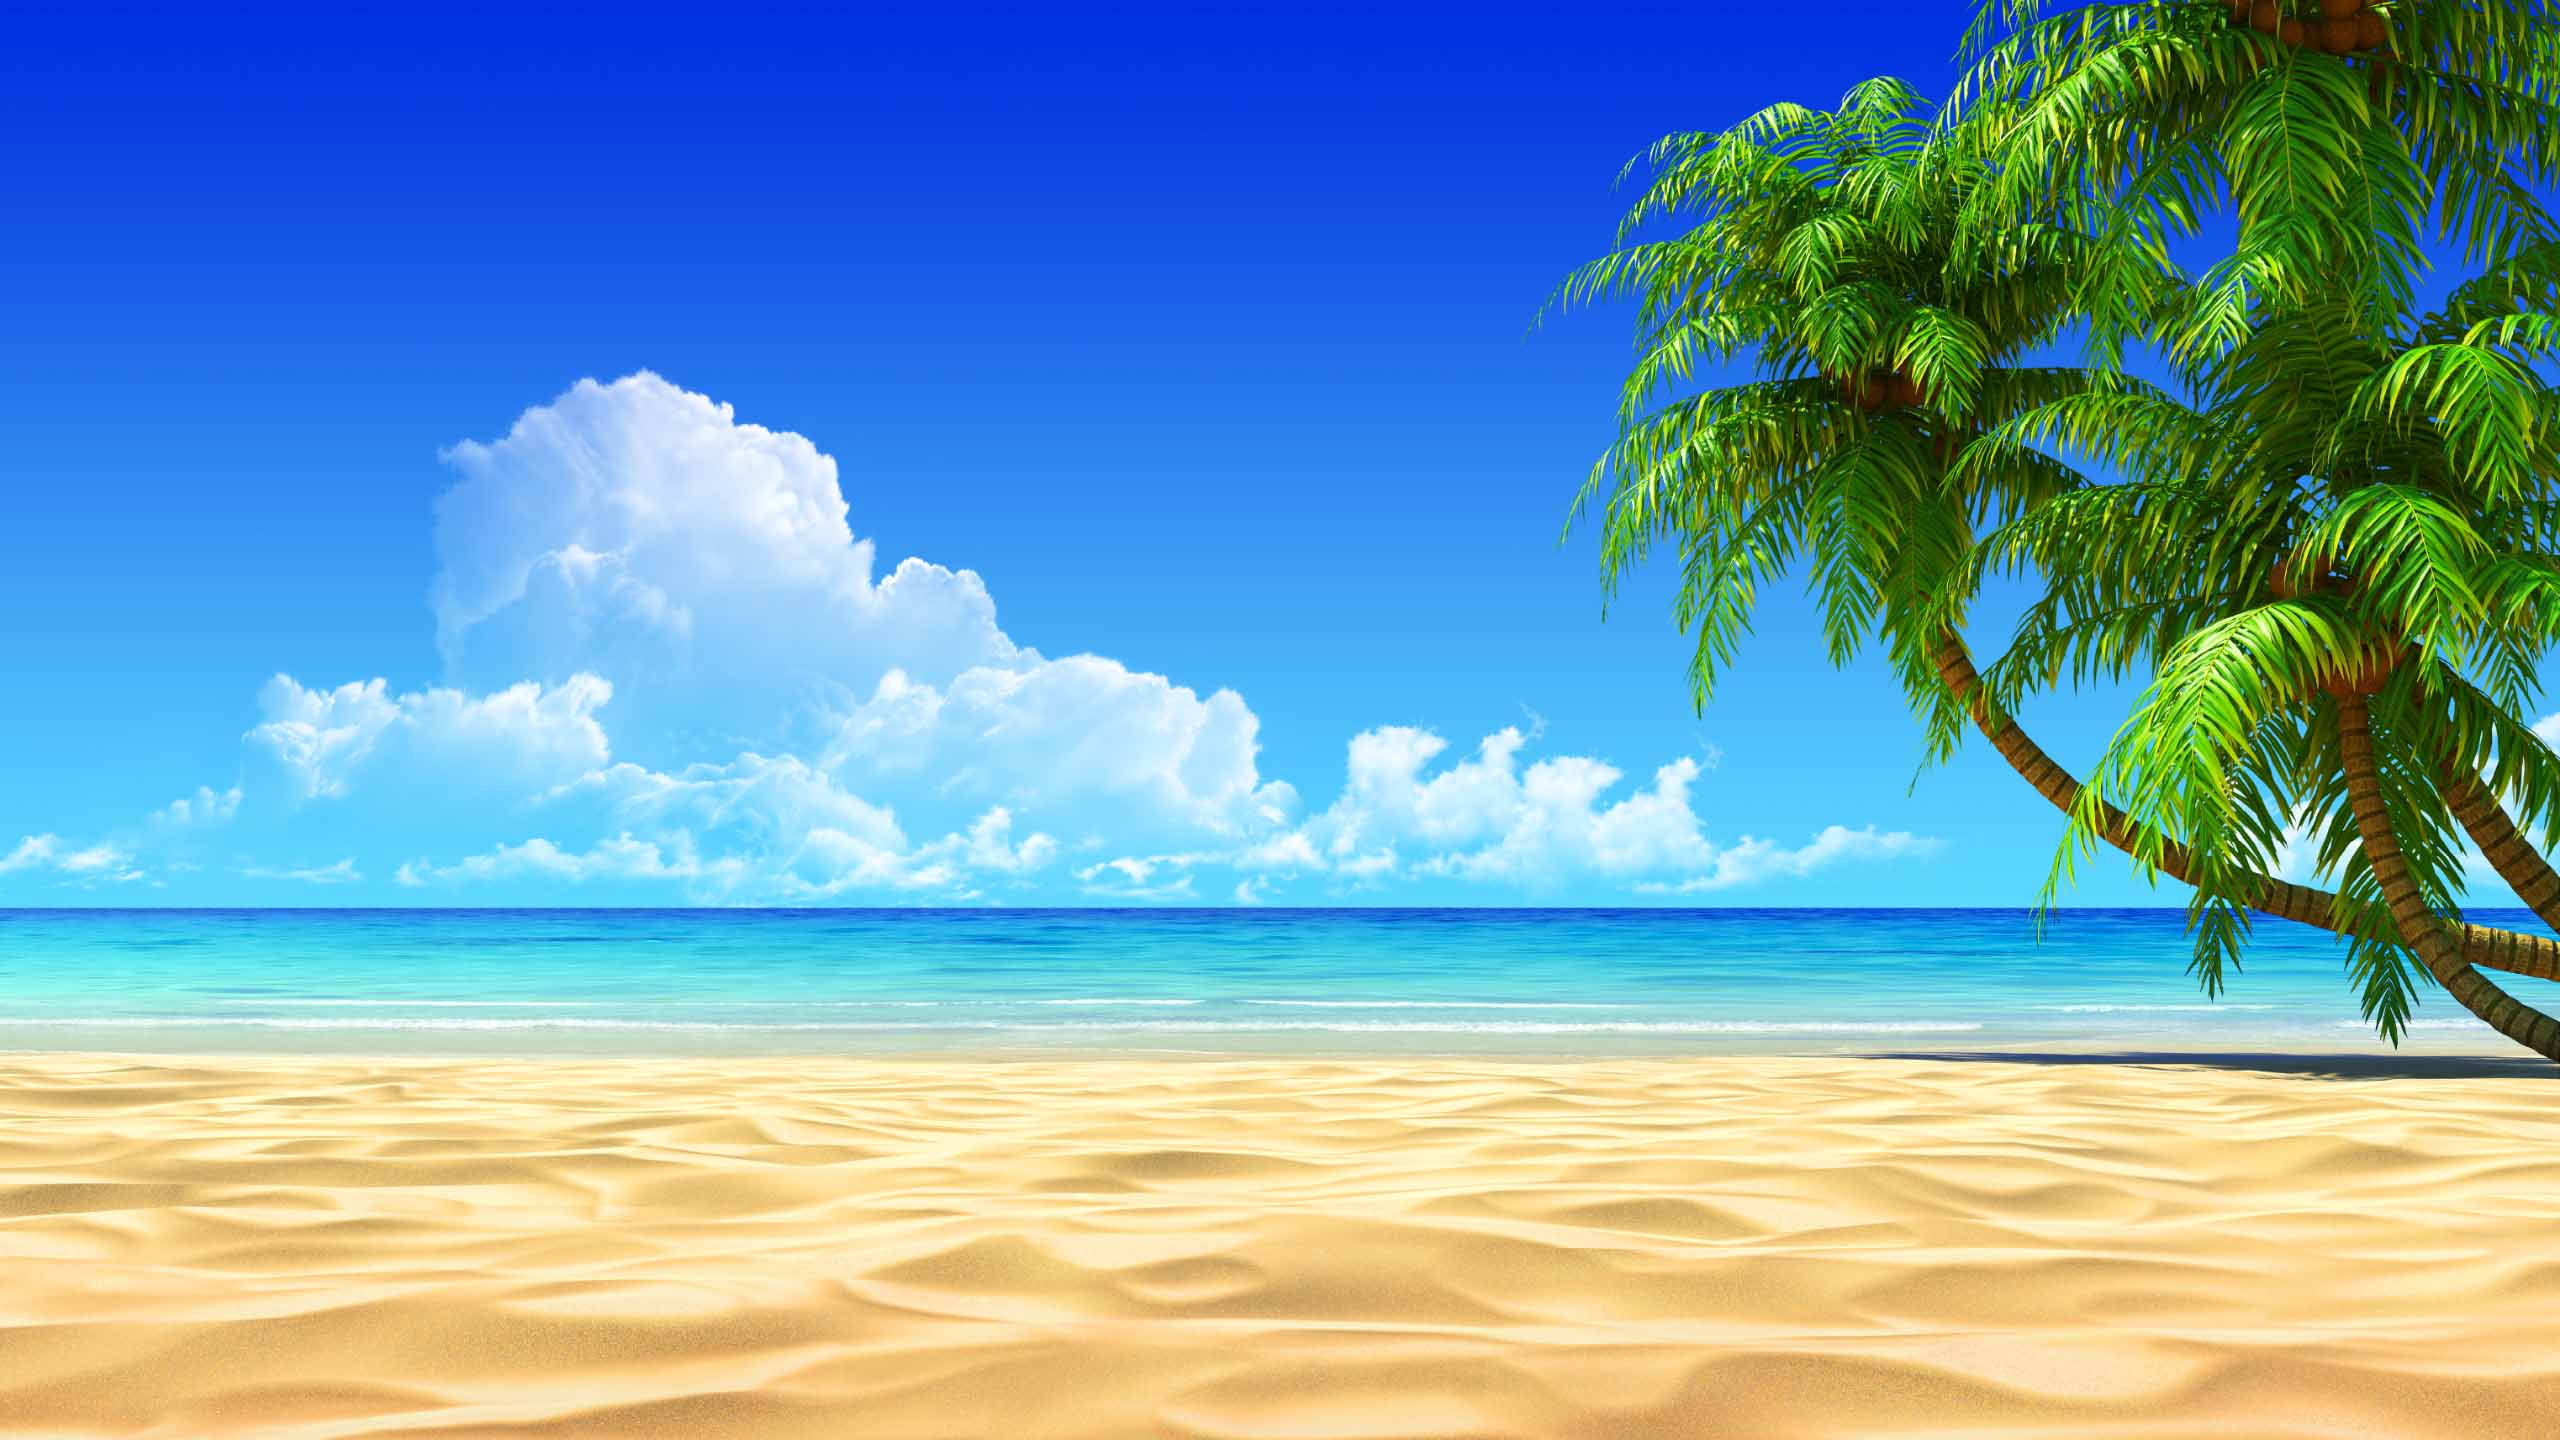 Beach Tropical Photo Wallpaper. Free Download Wallpaper Desktop